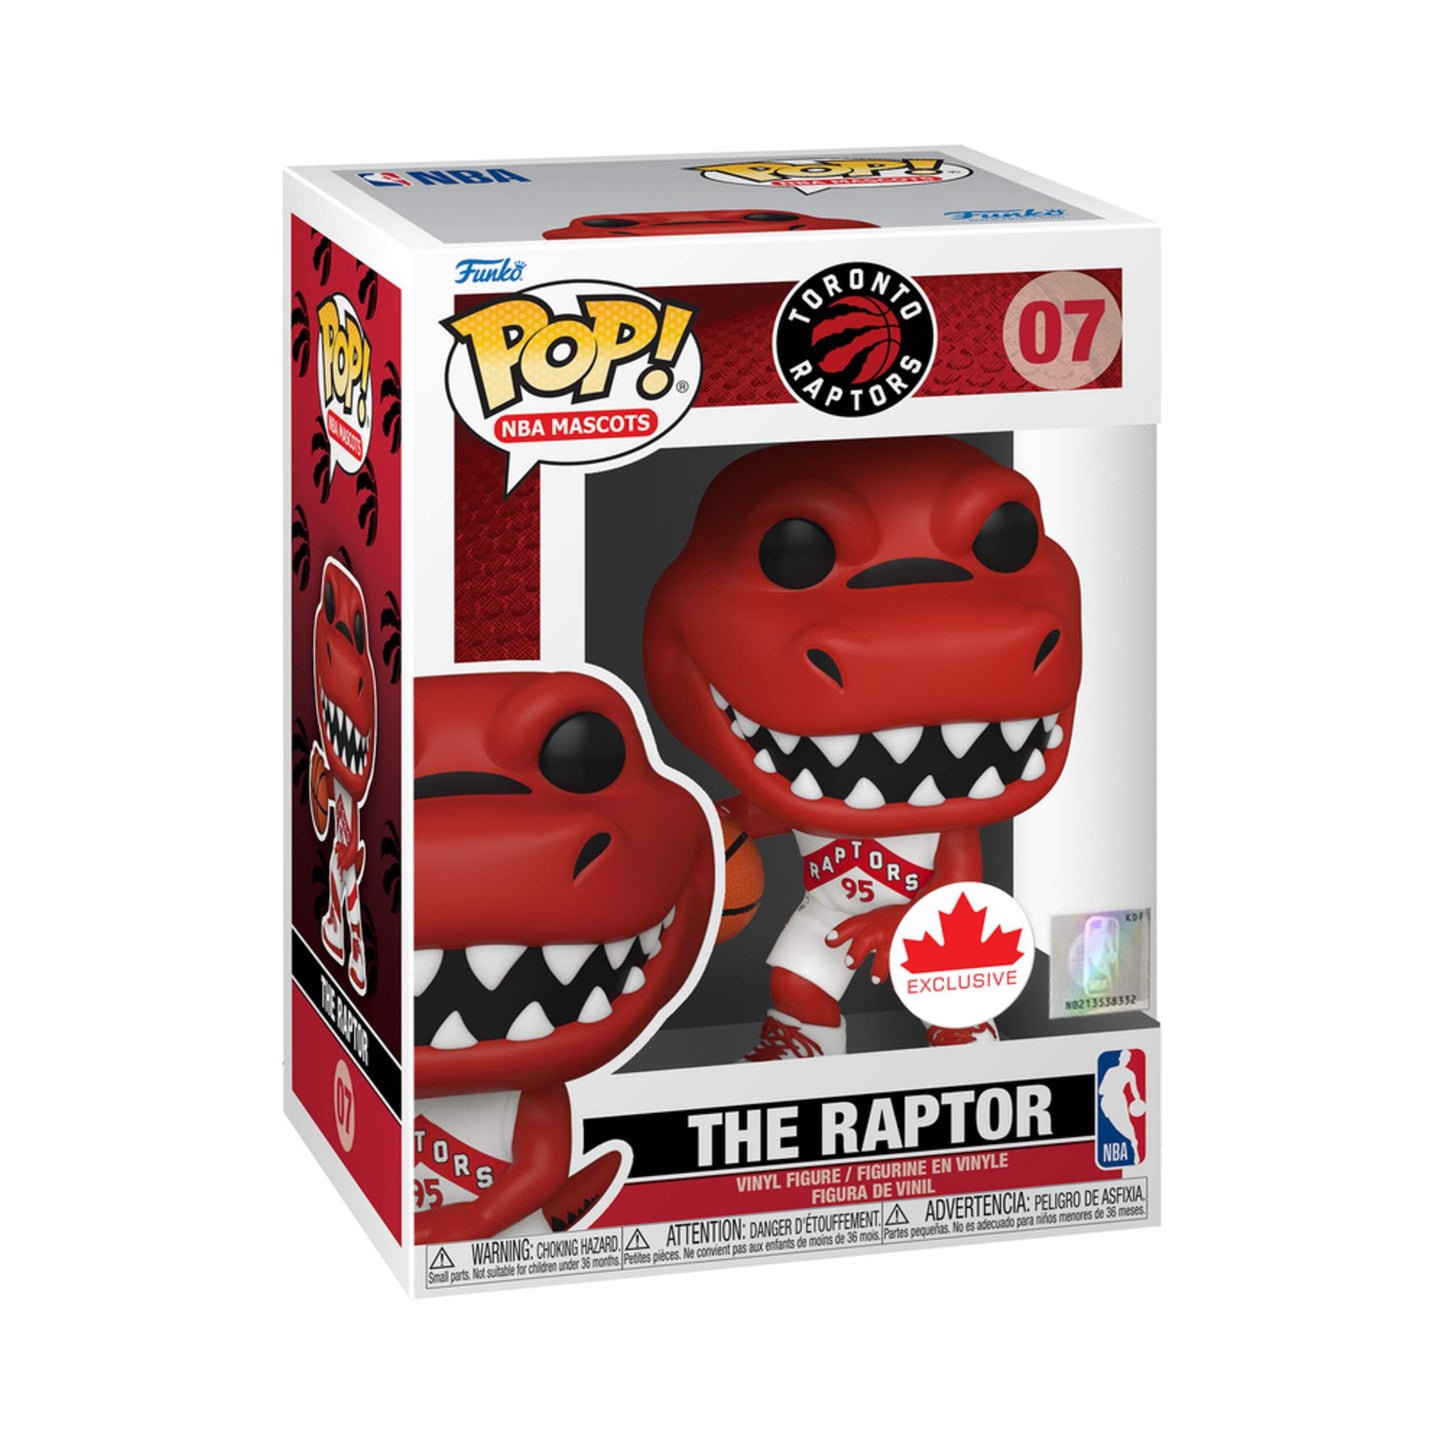 Funko Pop The Raptor - Toronto Raptors Mascot - Leaside Hockey Shop Inc.